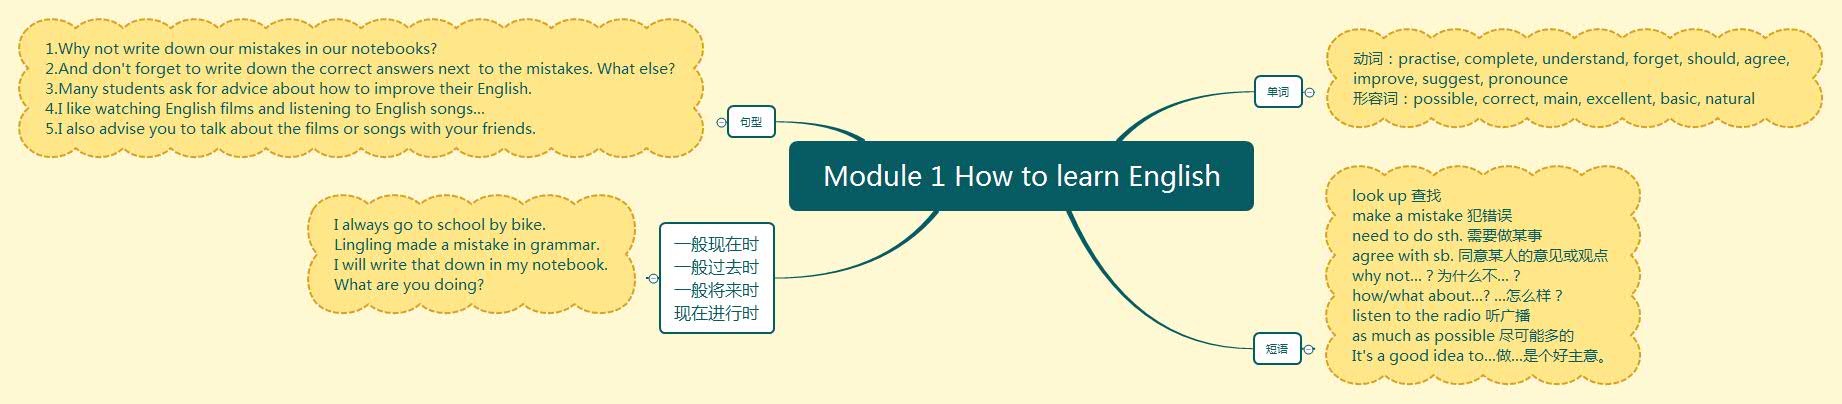 Module 1 How to learn English.jpg